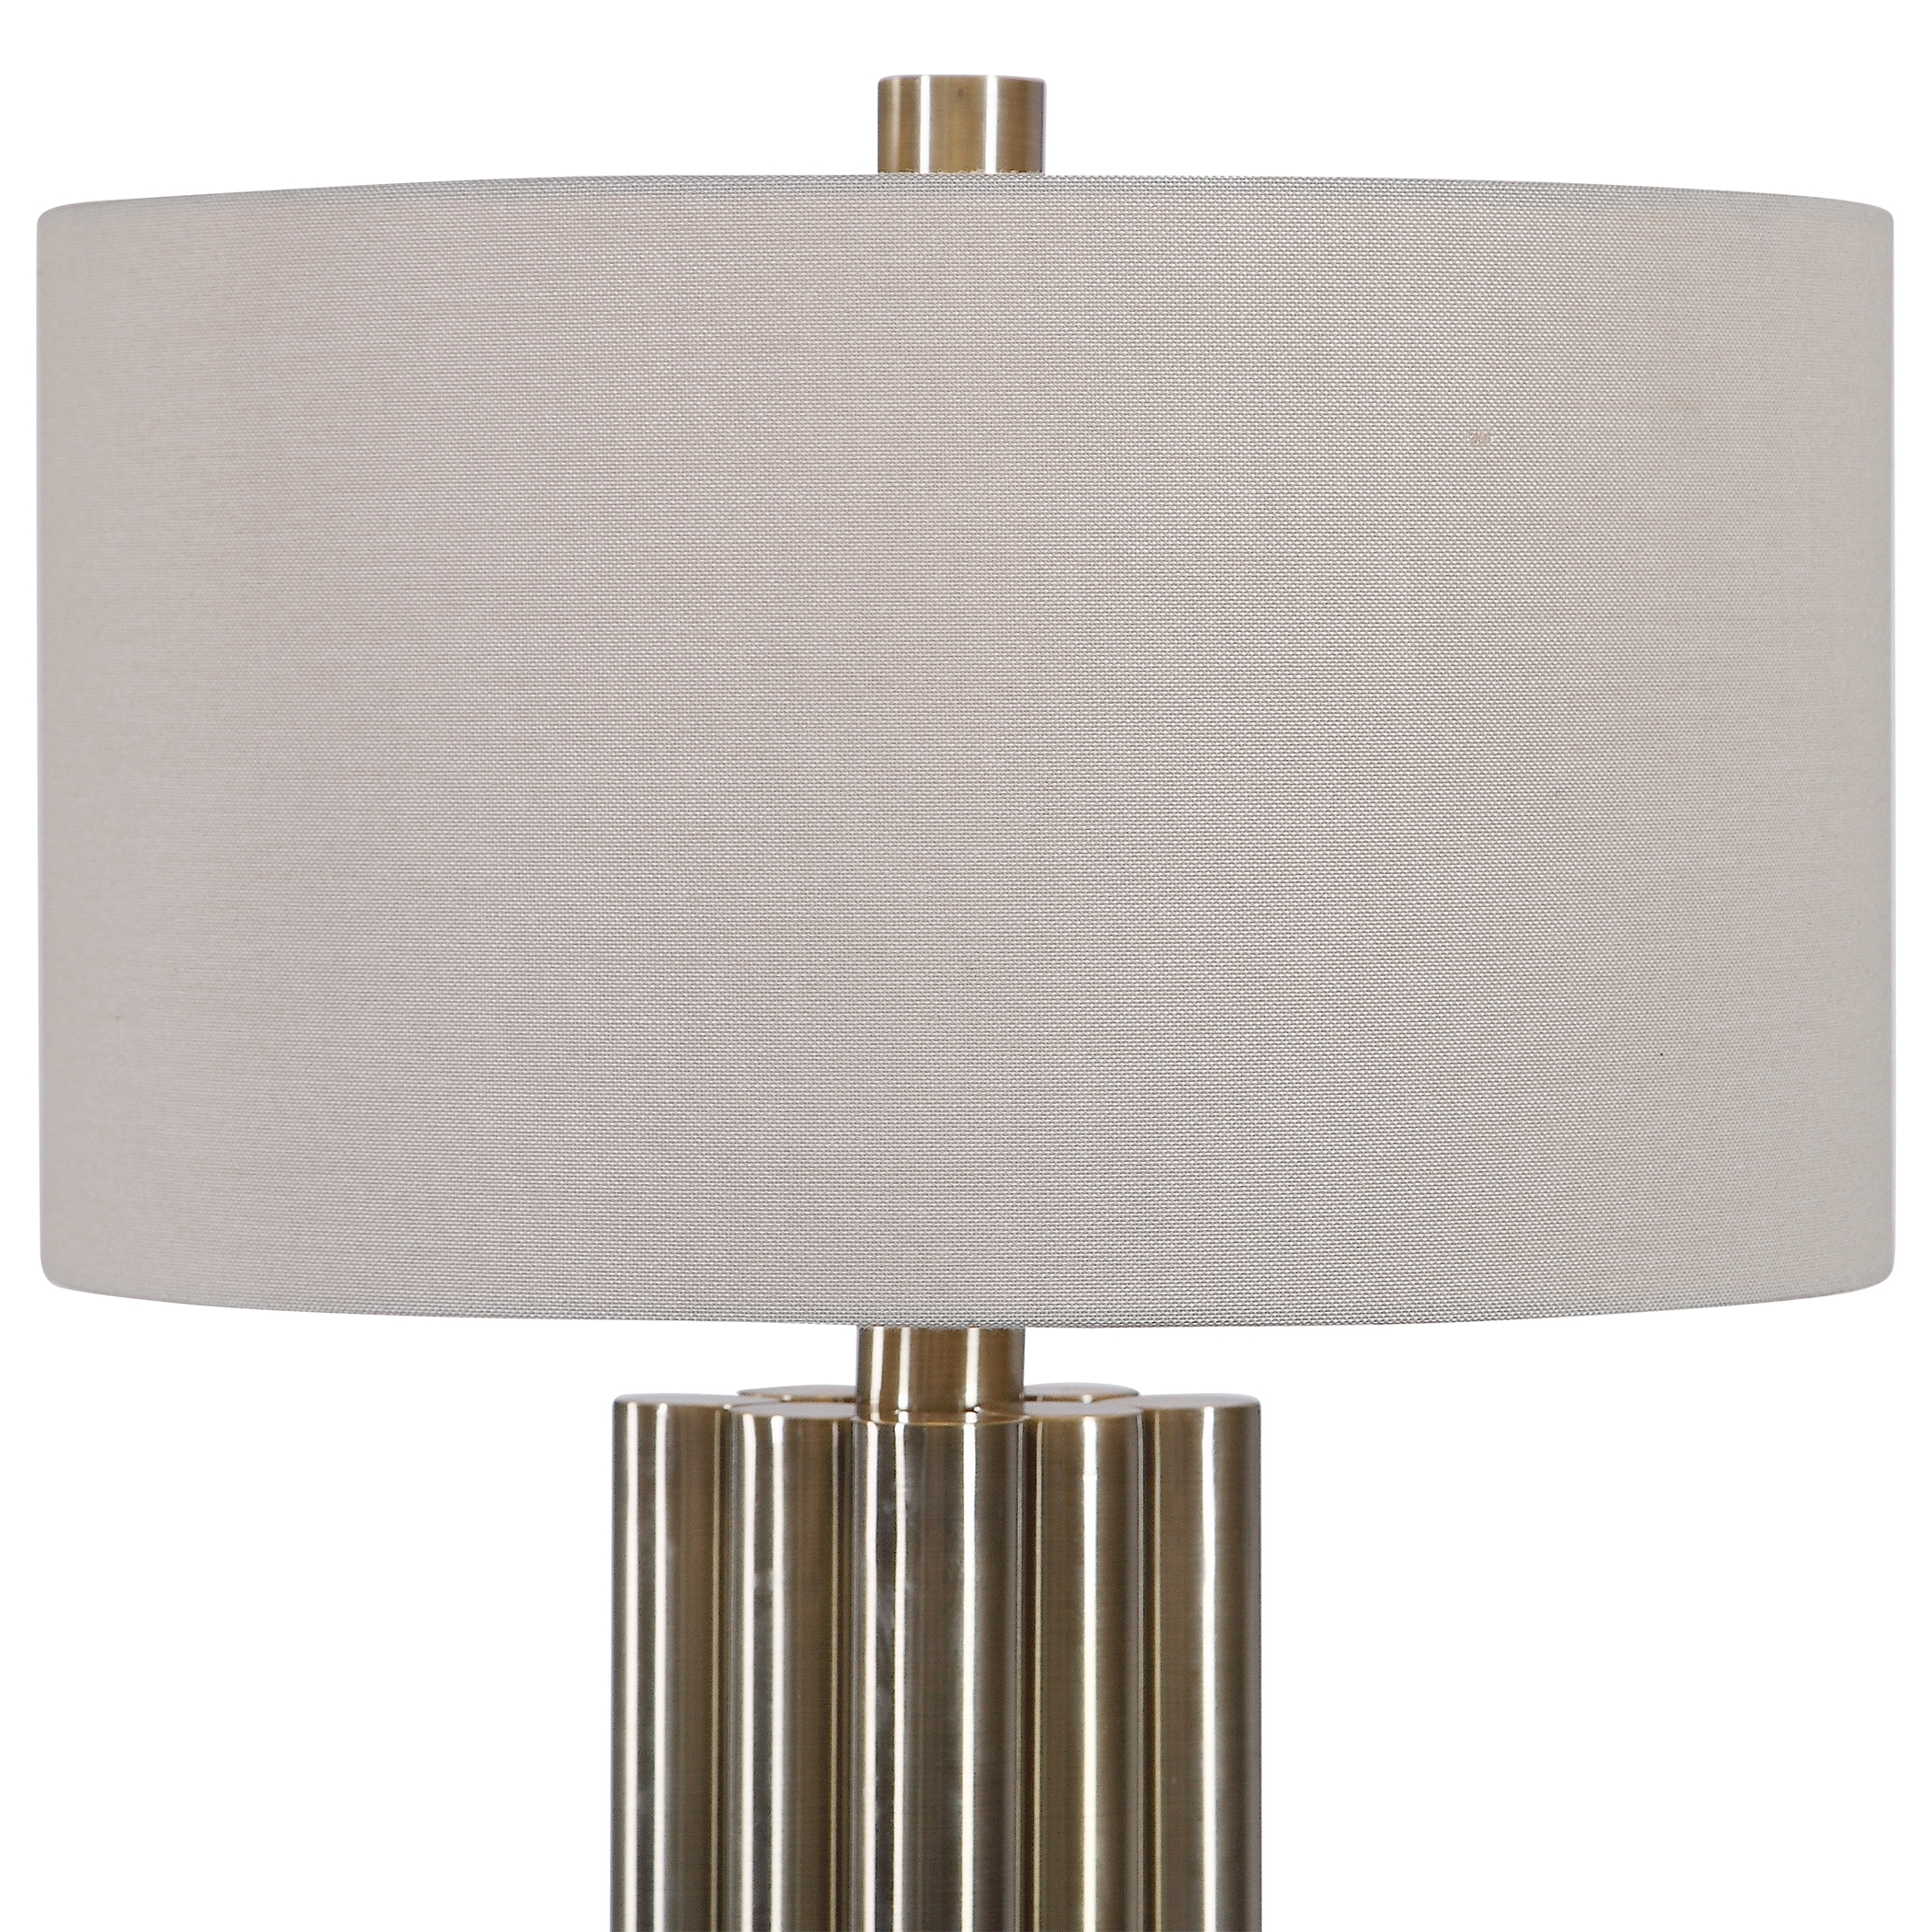 Conran Brass Table Lamp - Image 4